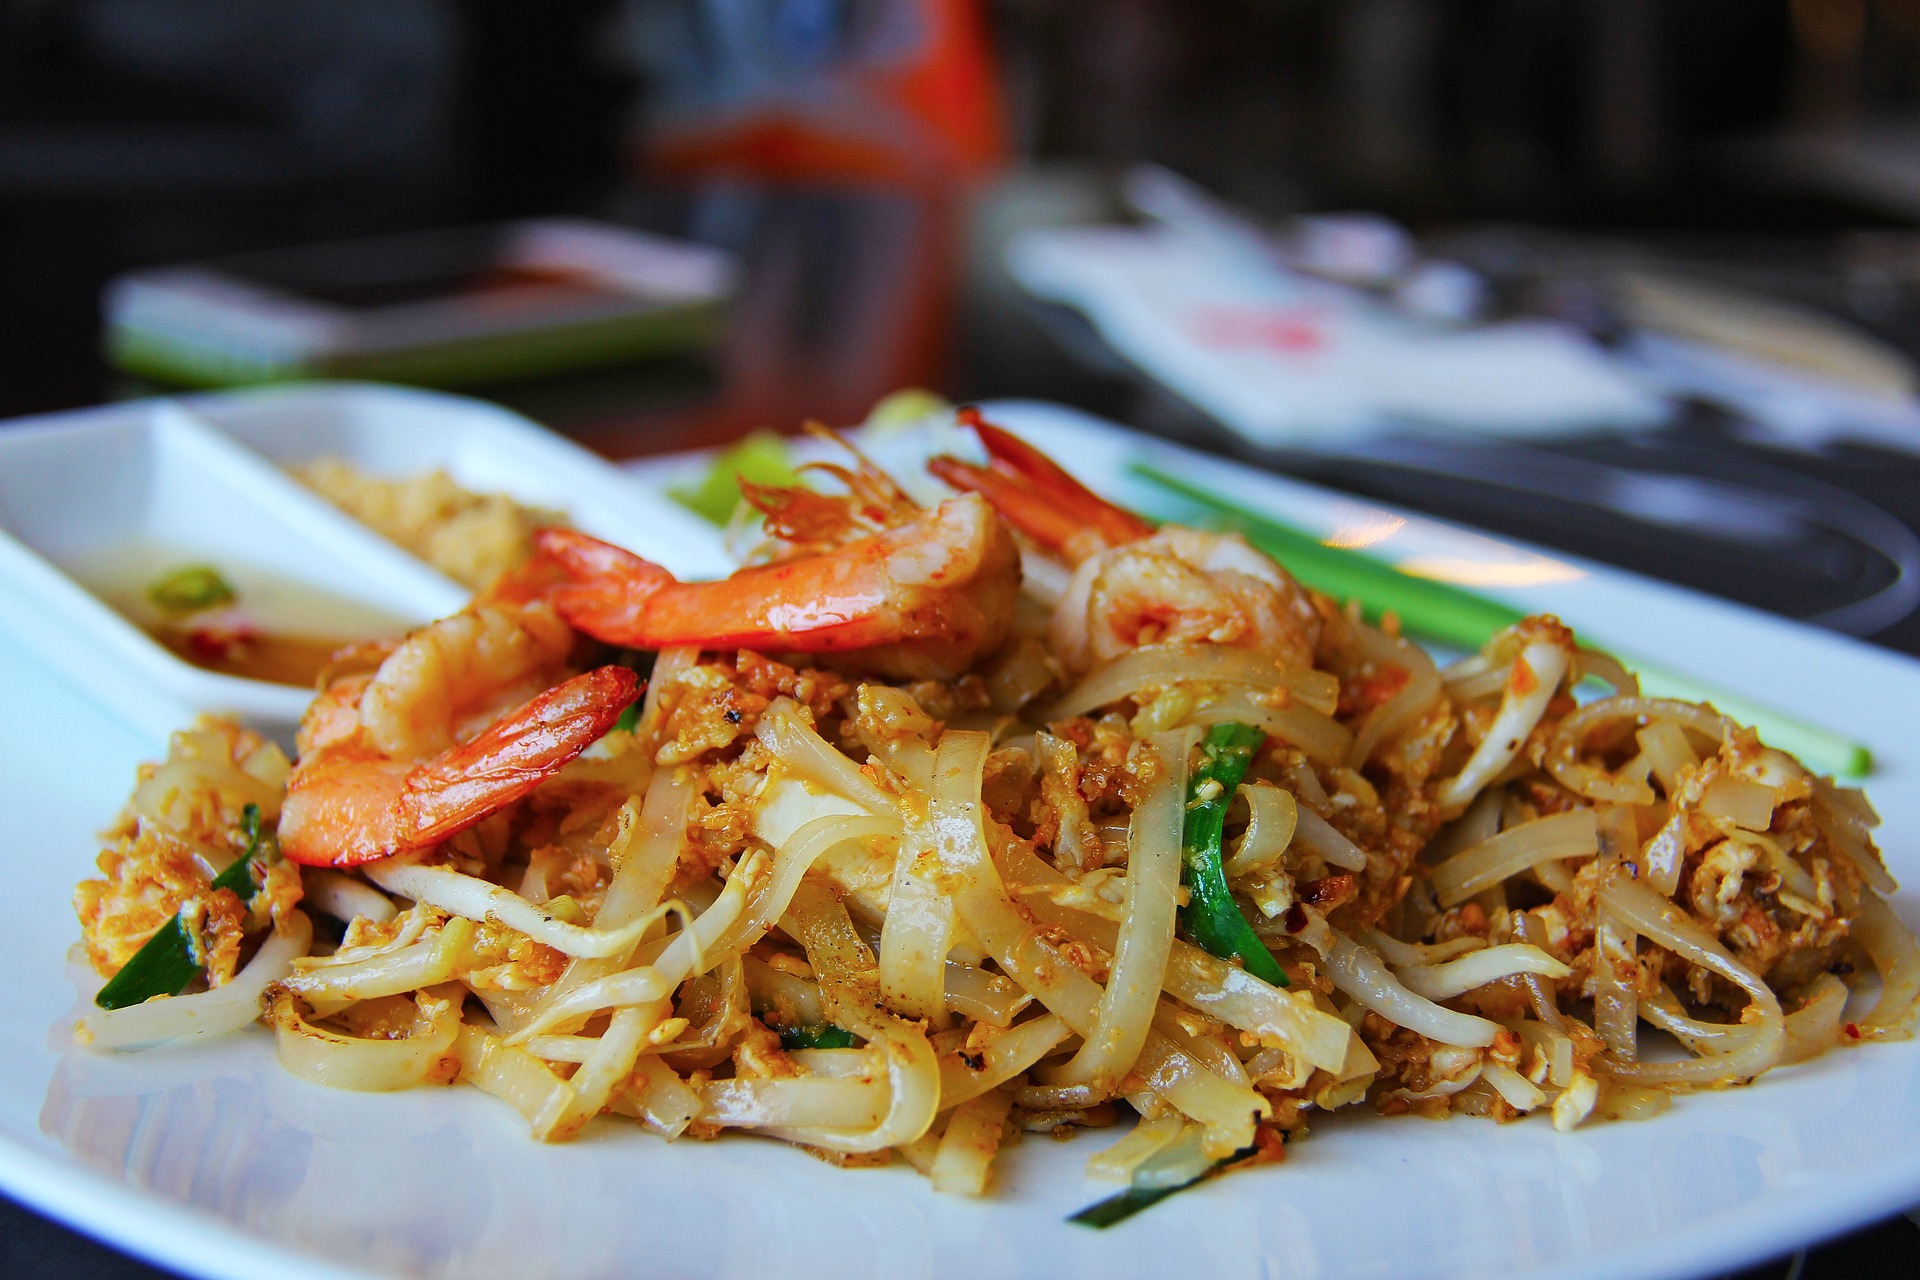 Enjoy pad Thai and more at Rickshaw restaurant